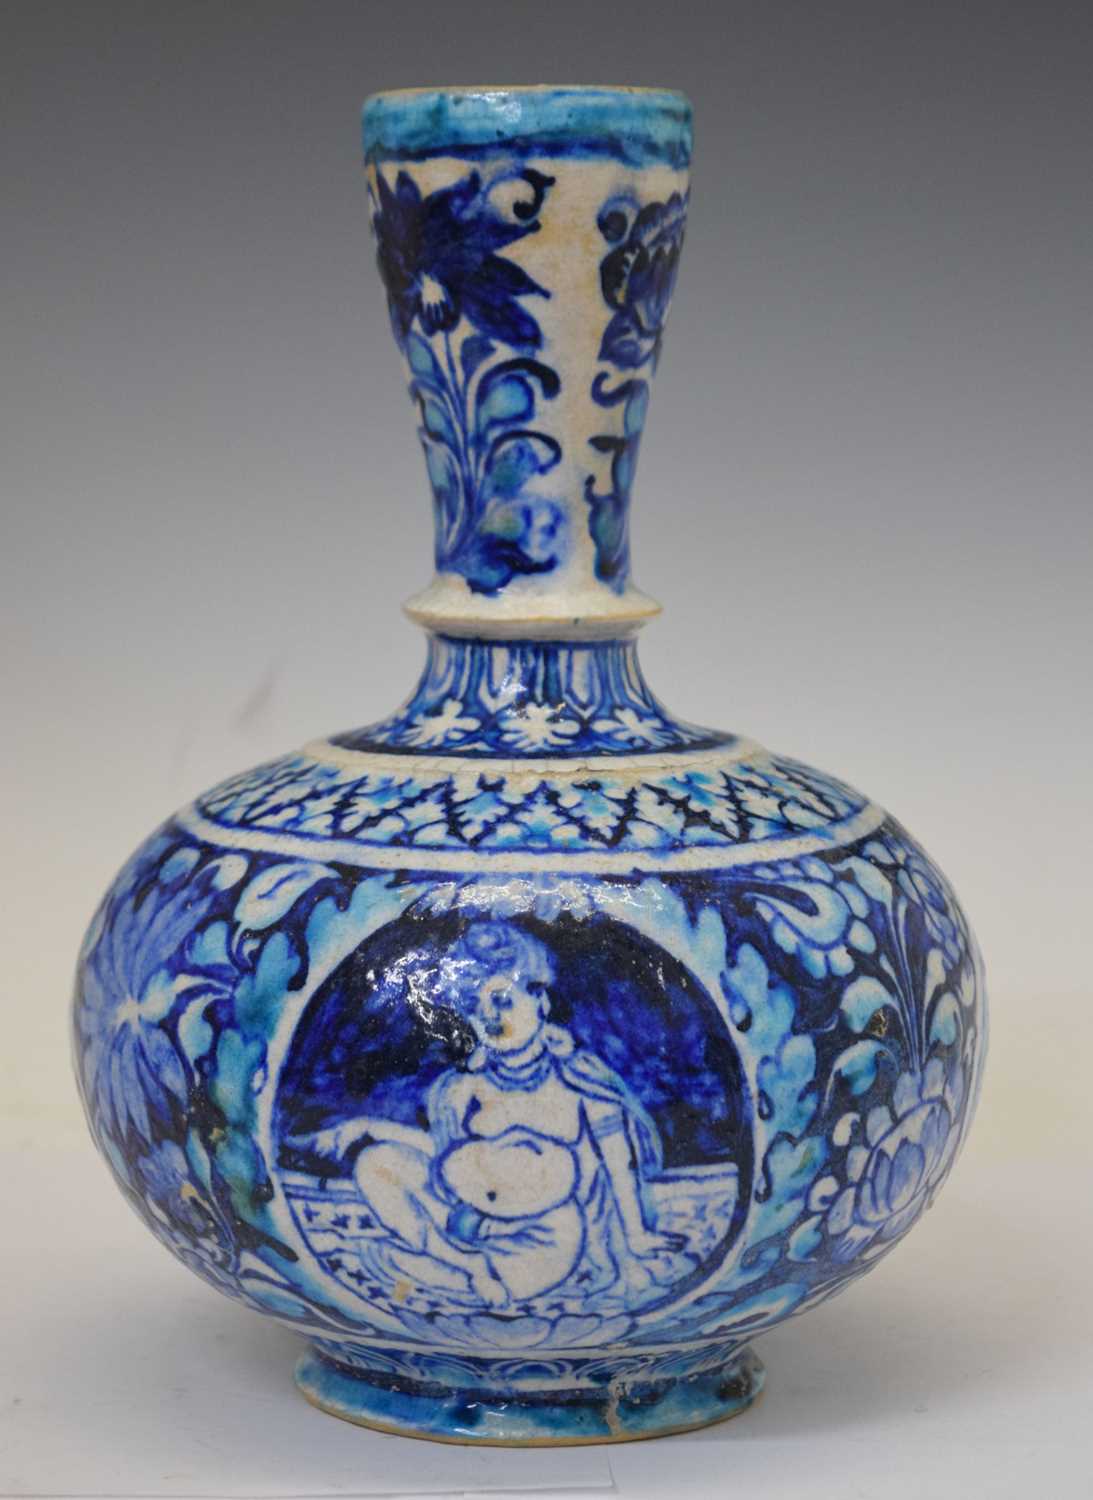 Pakistani blue and white vase, possibly Multan